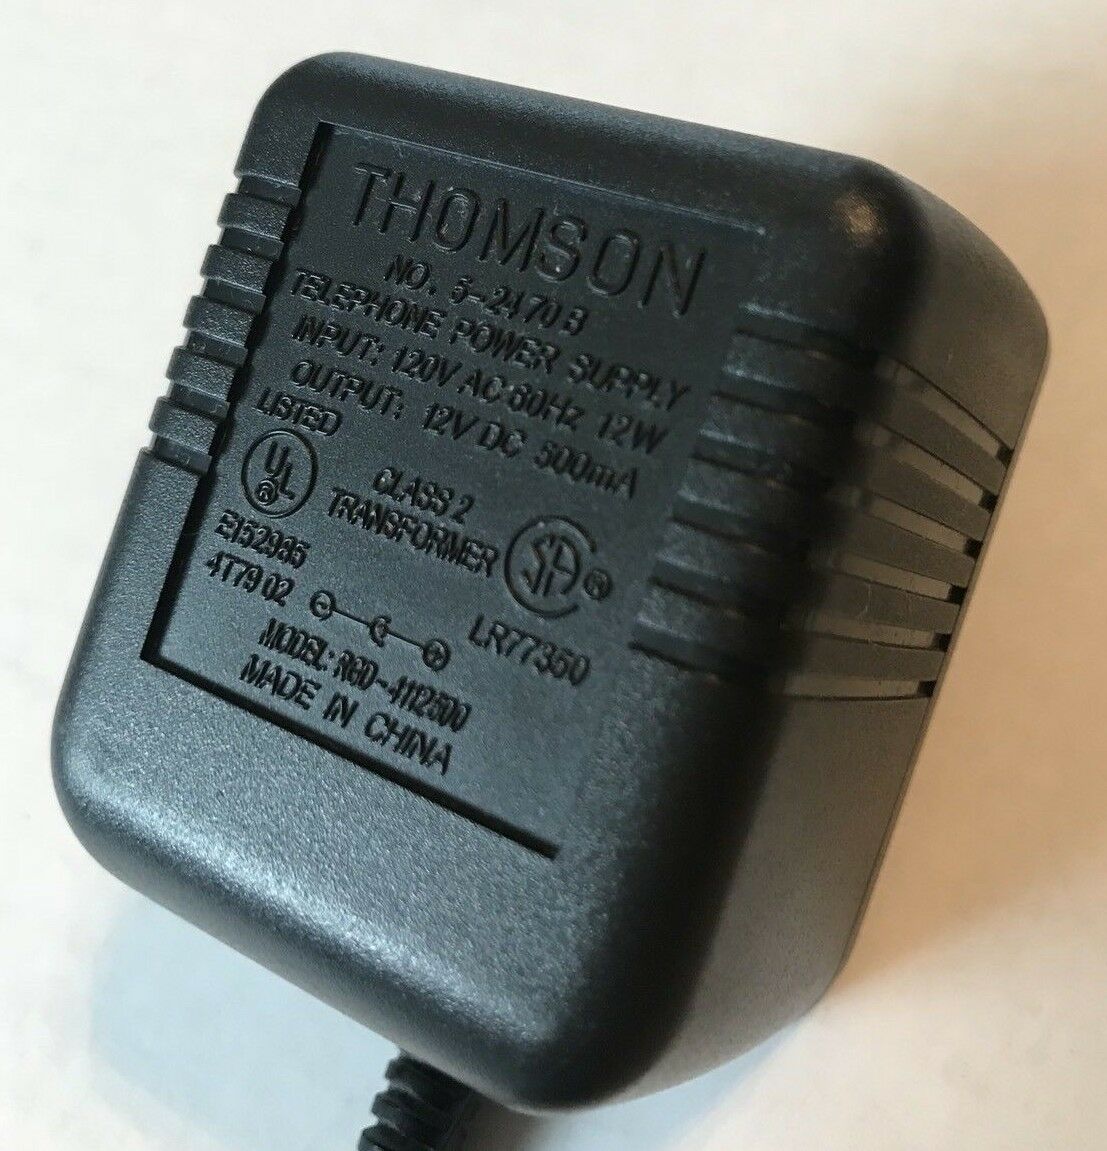 New 12V 500mA Thompson 5-2470B Class 2 Transformer Ac Adapter